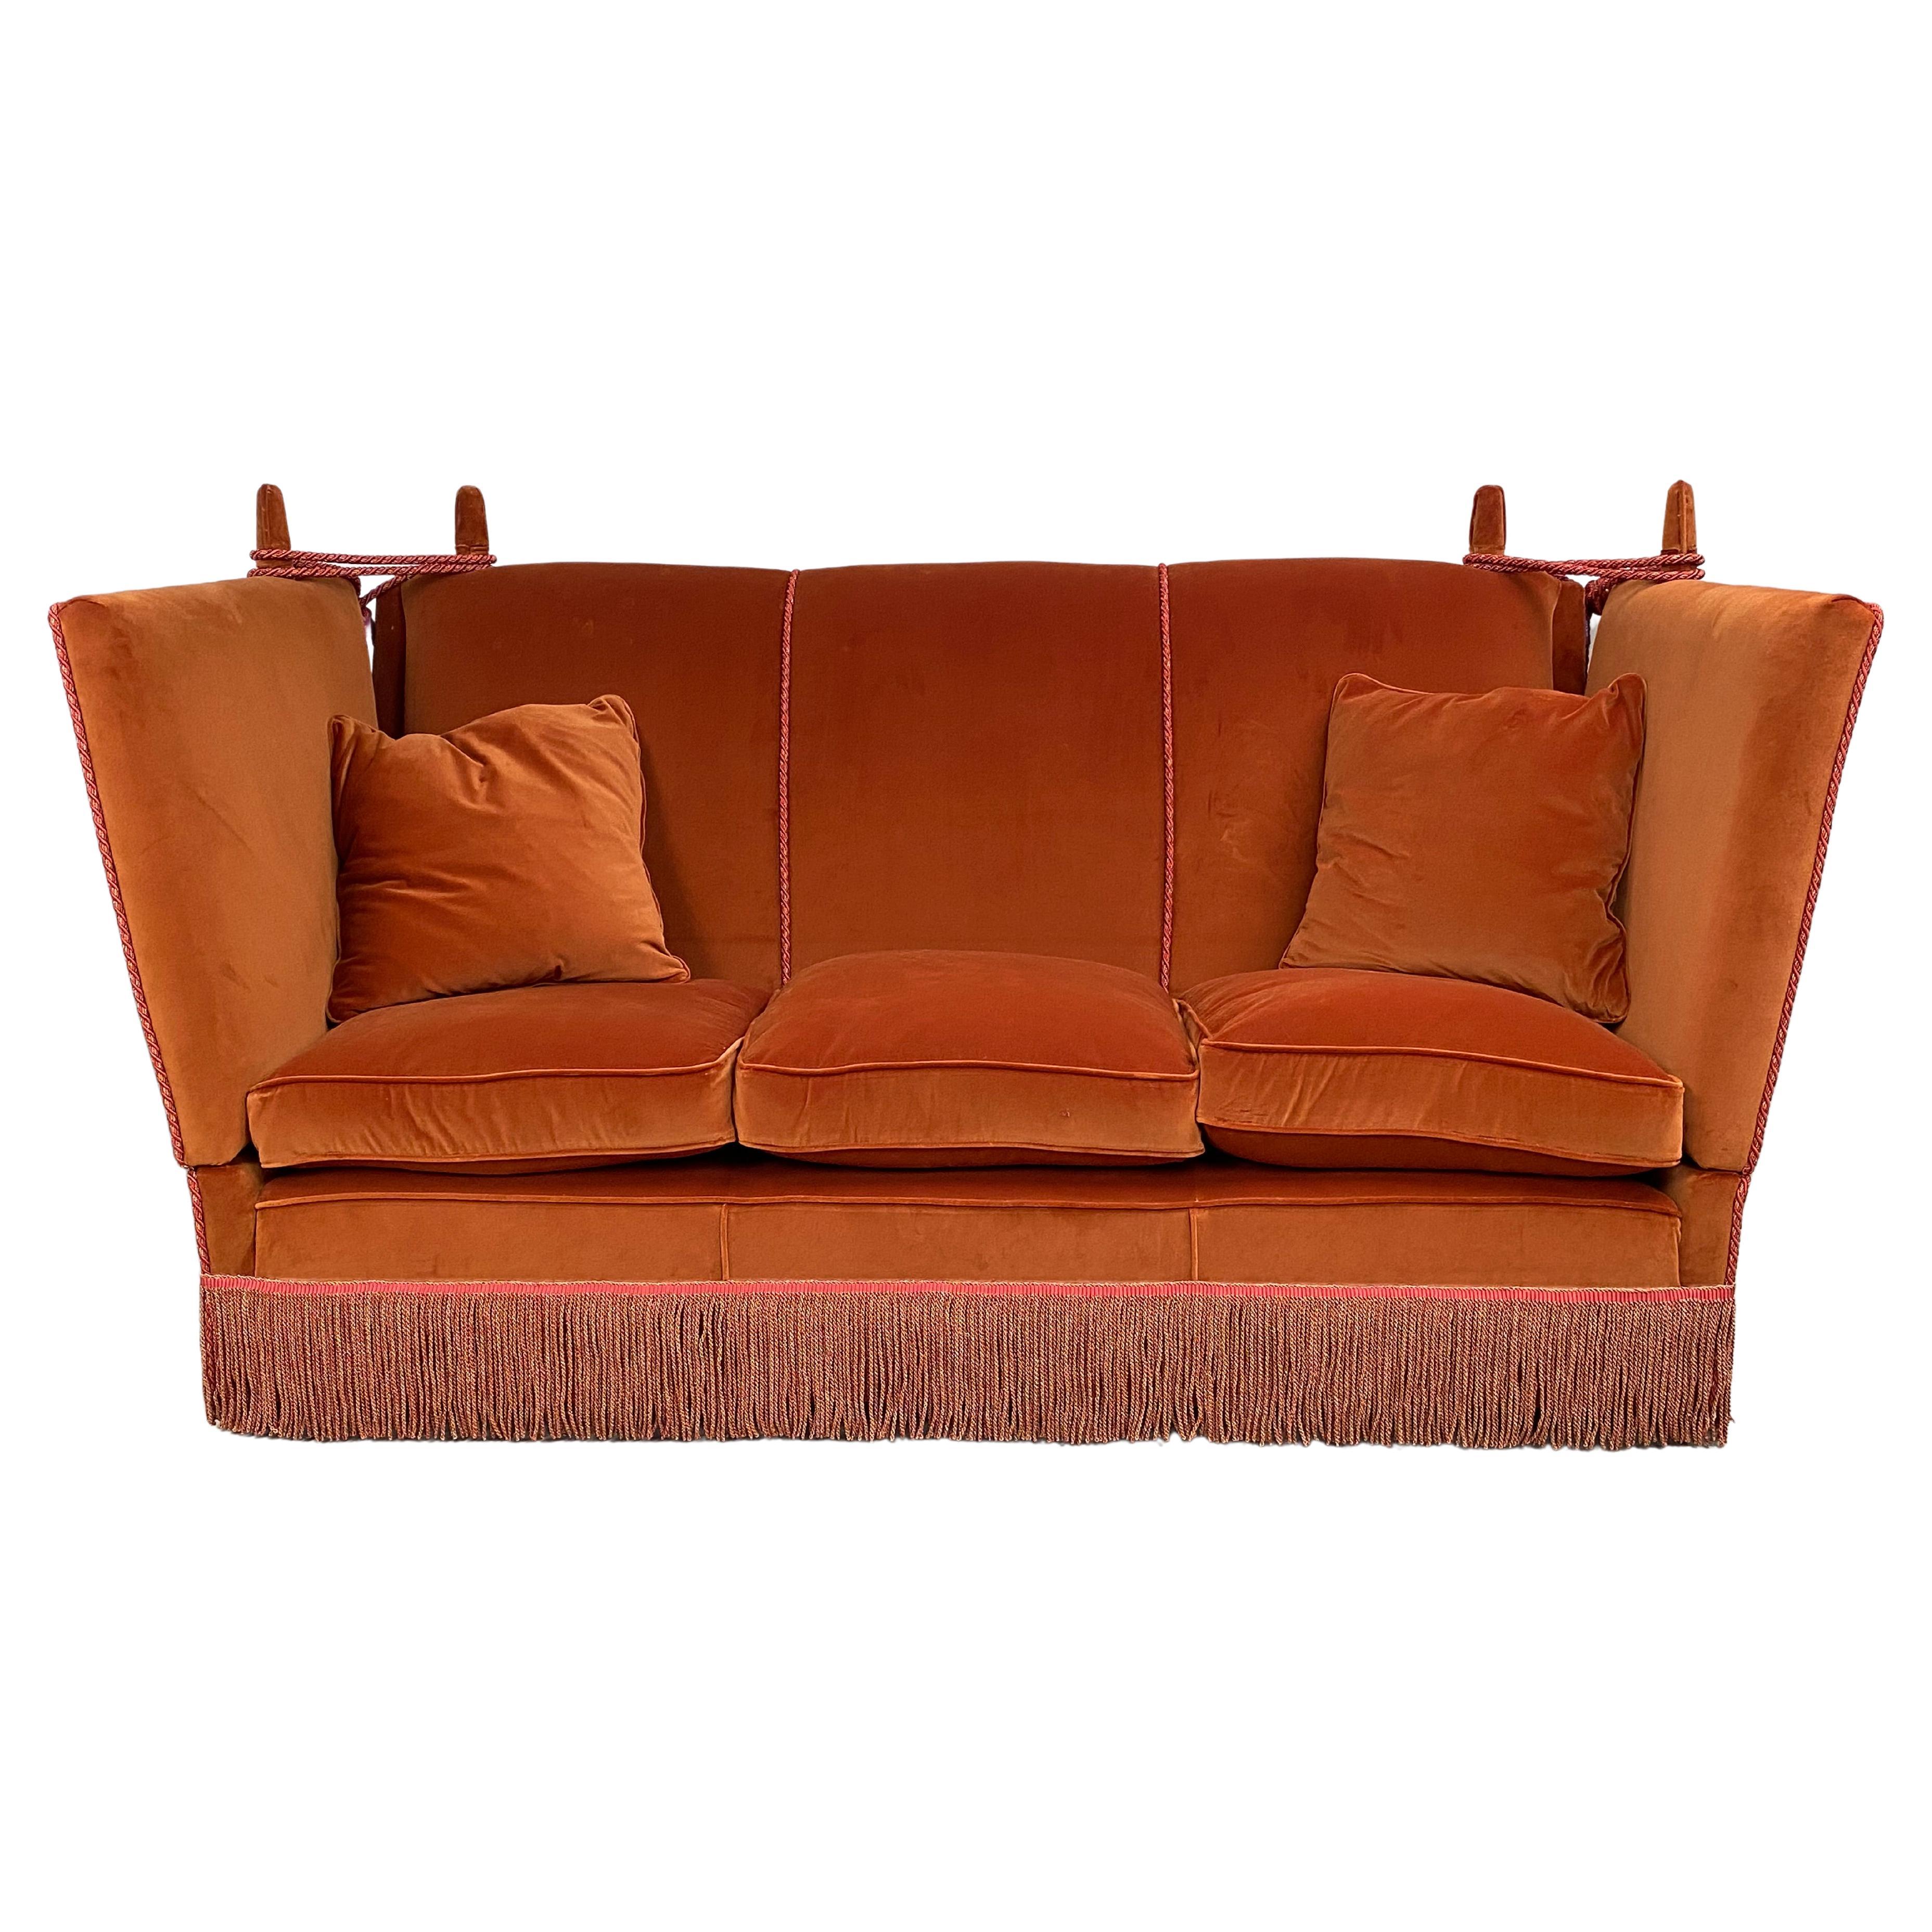 Mid Century Modern, 3 seater Knoll Drop Arm Sofa in velvet orange, England.